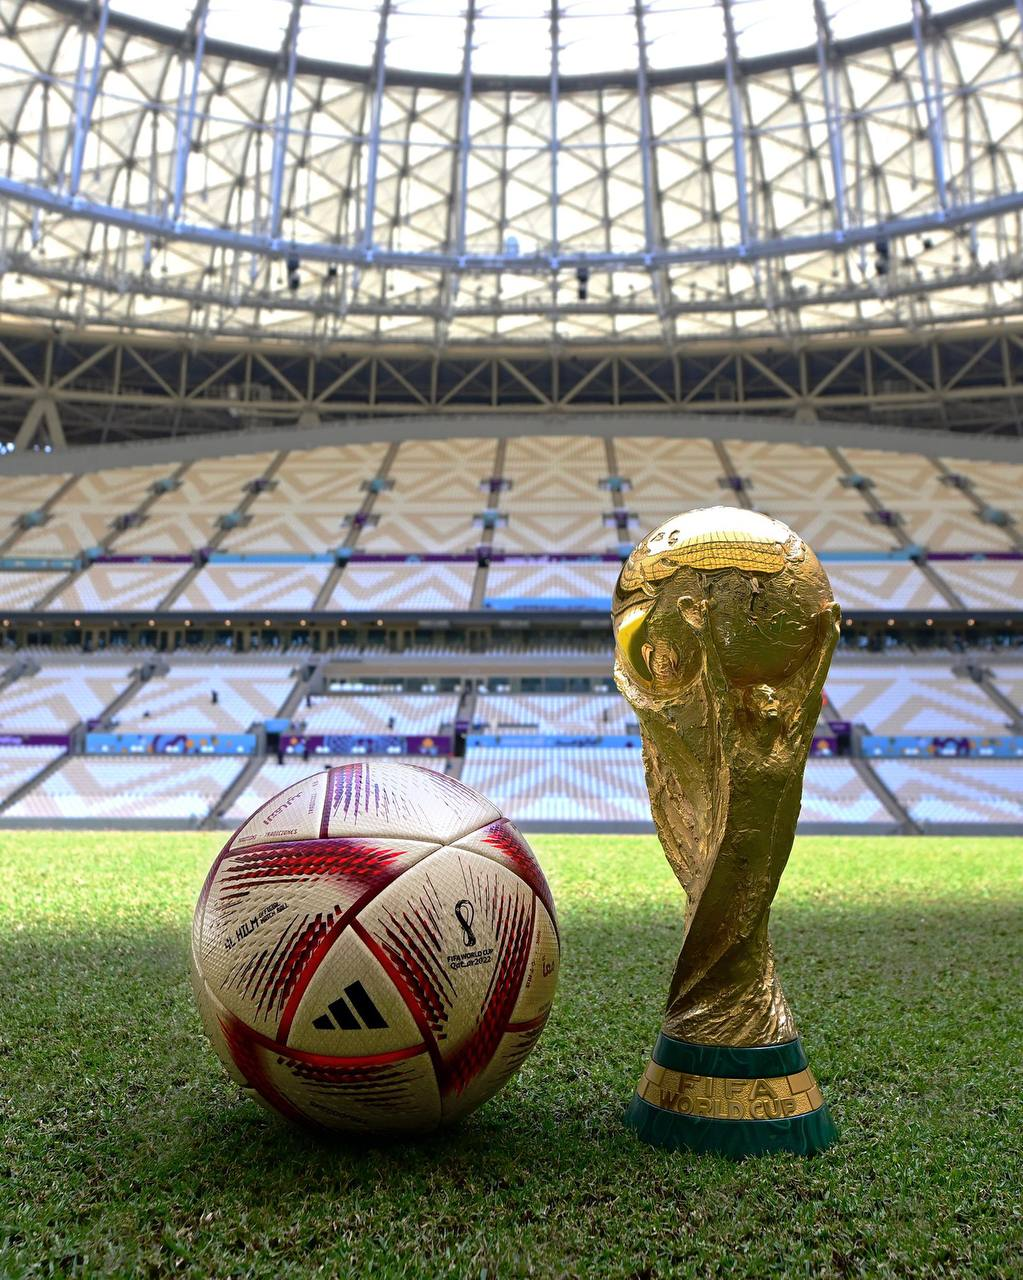 Игры чемпионат футбола 2018. Qatar 2022 мяч. Qatar World Cup 2022 мяч. FIFA World Cup 2022 мяч. Мяч ЧМ 2022 В Катаре финал.